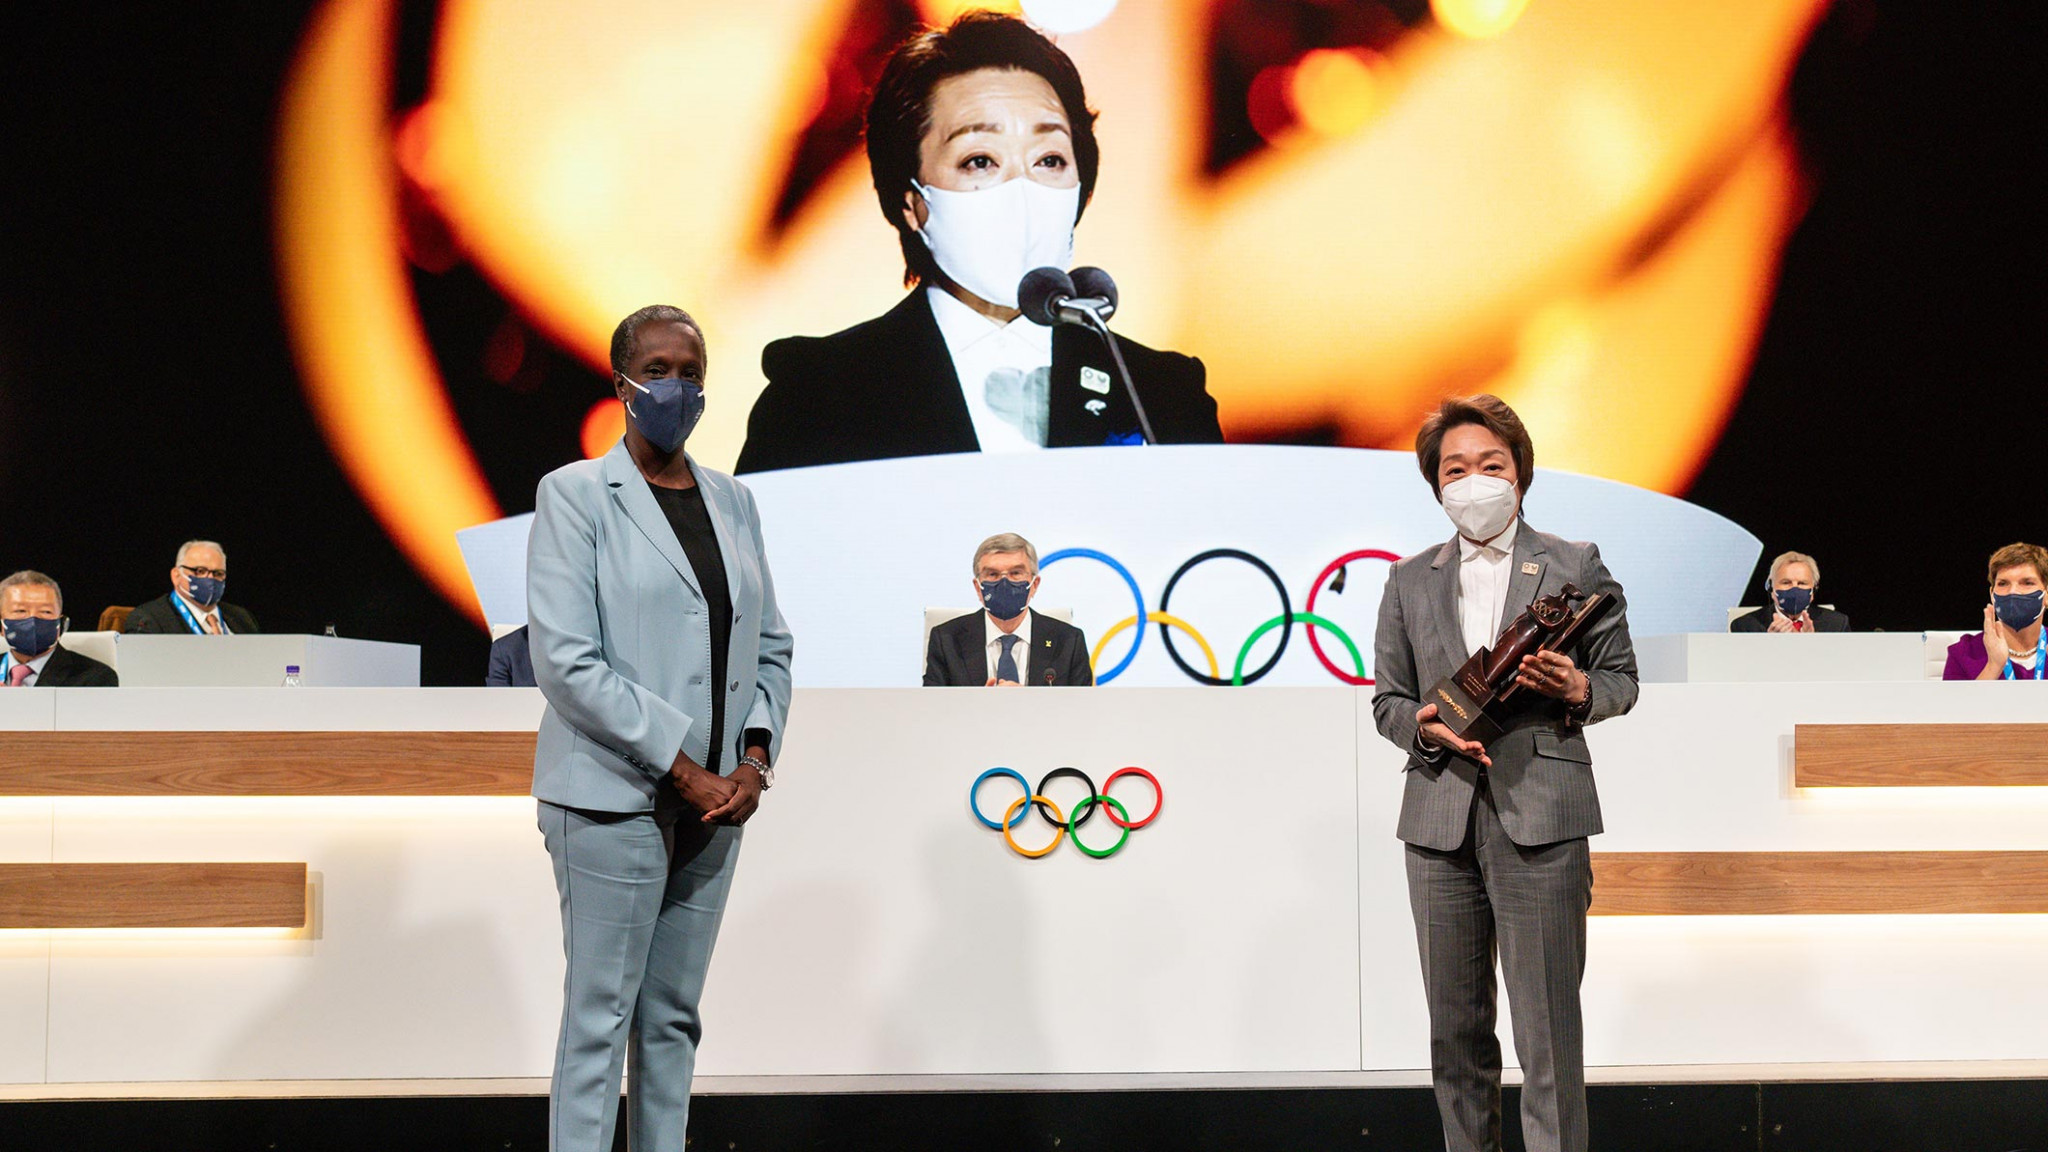 Tokyo 2020 President Hashimoto receives IOC Women and Sport Awards world prize